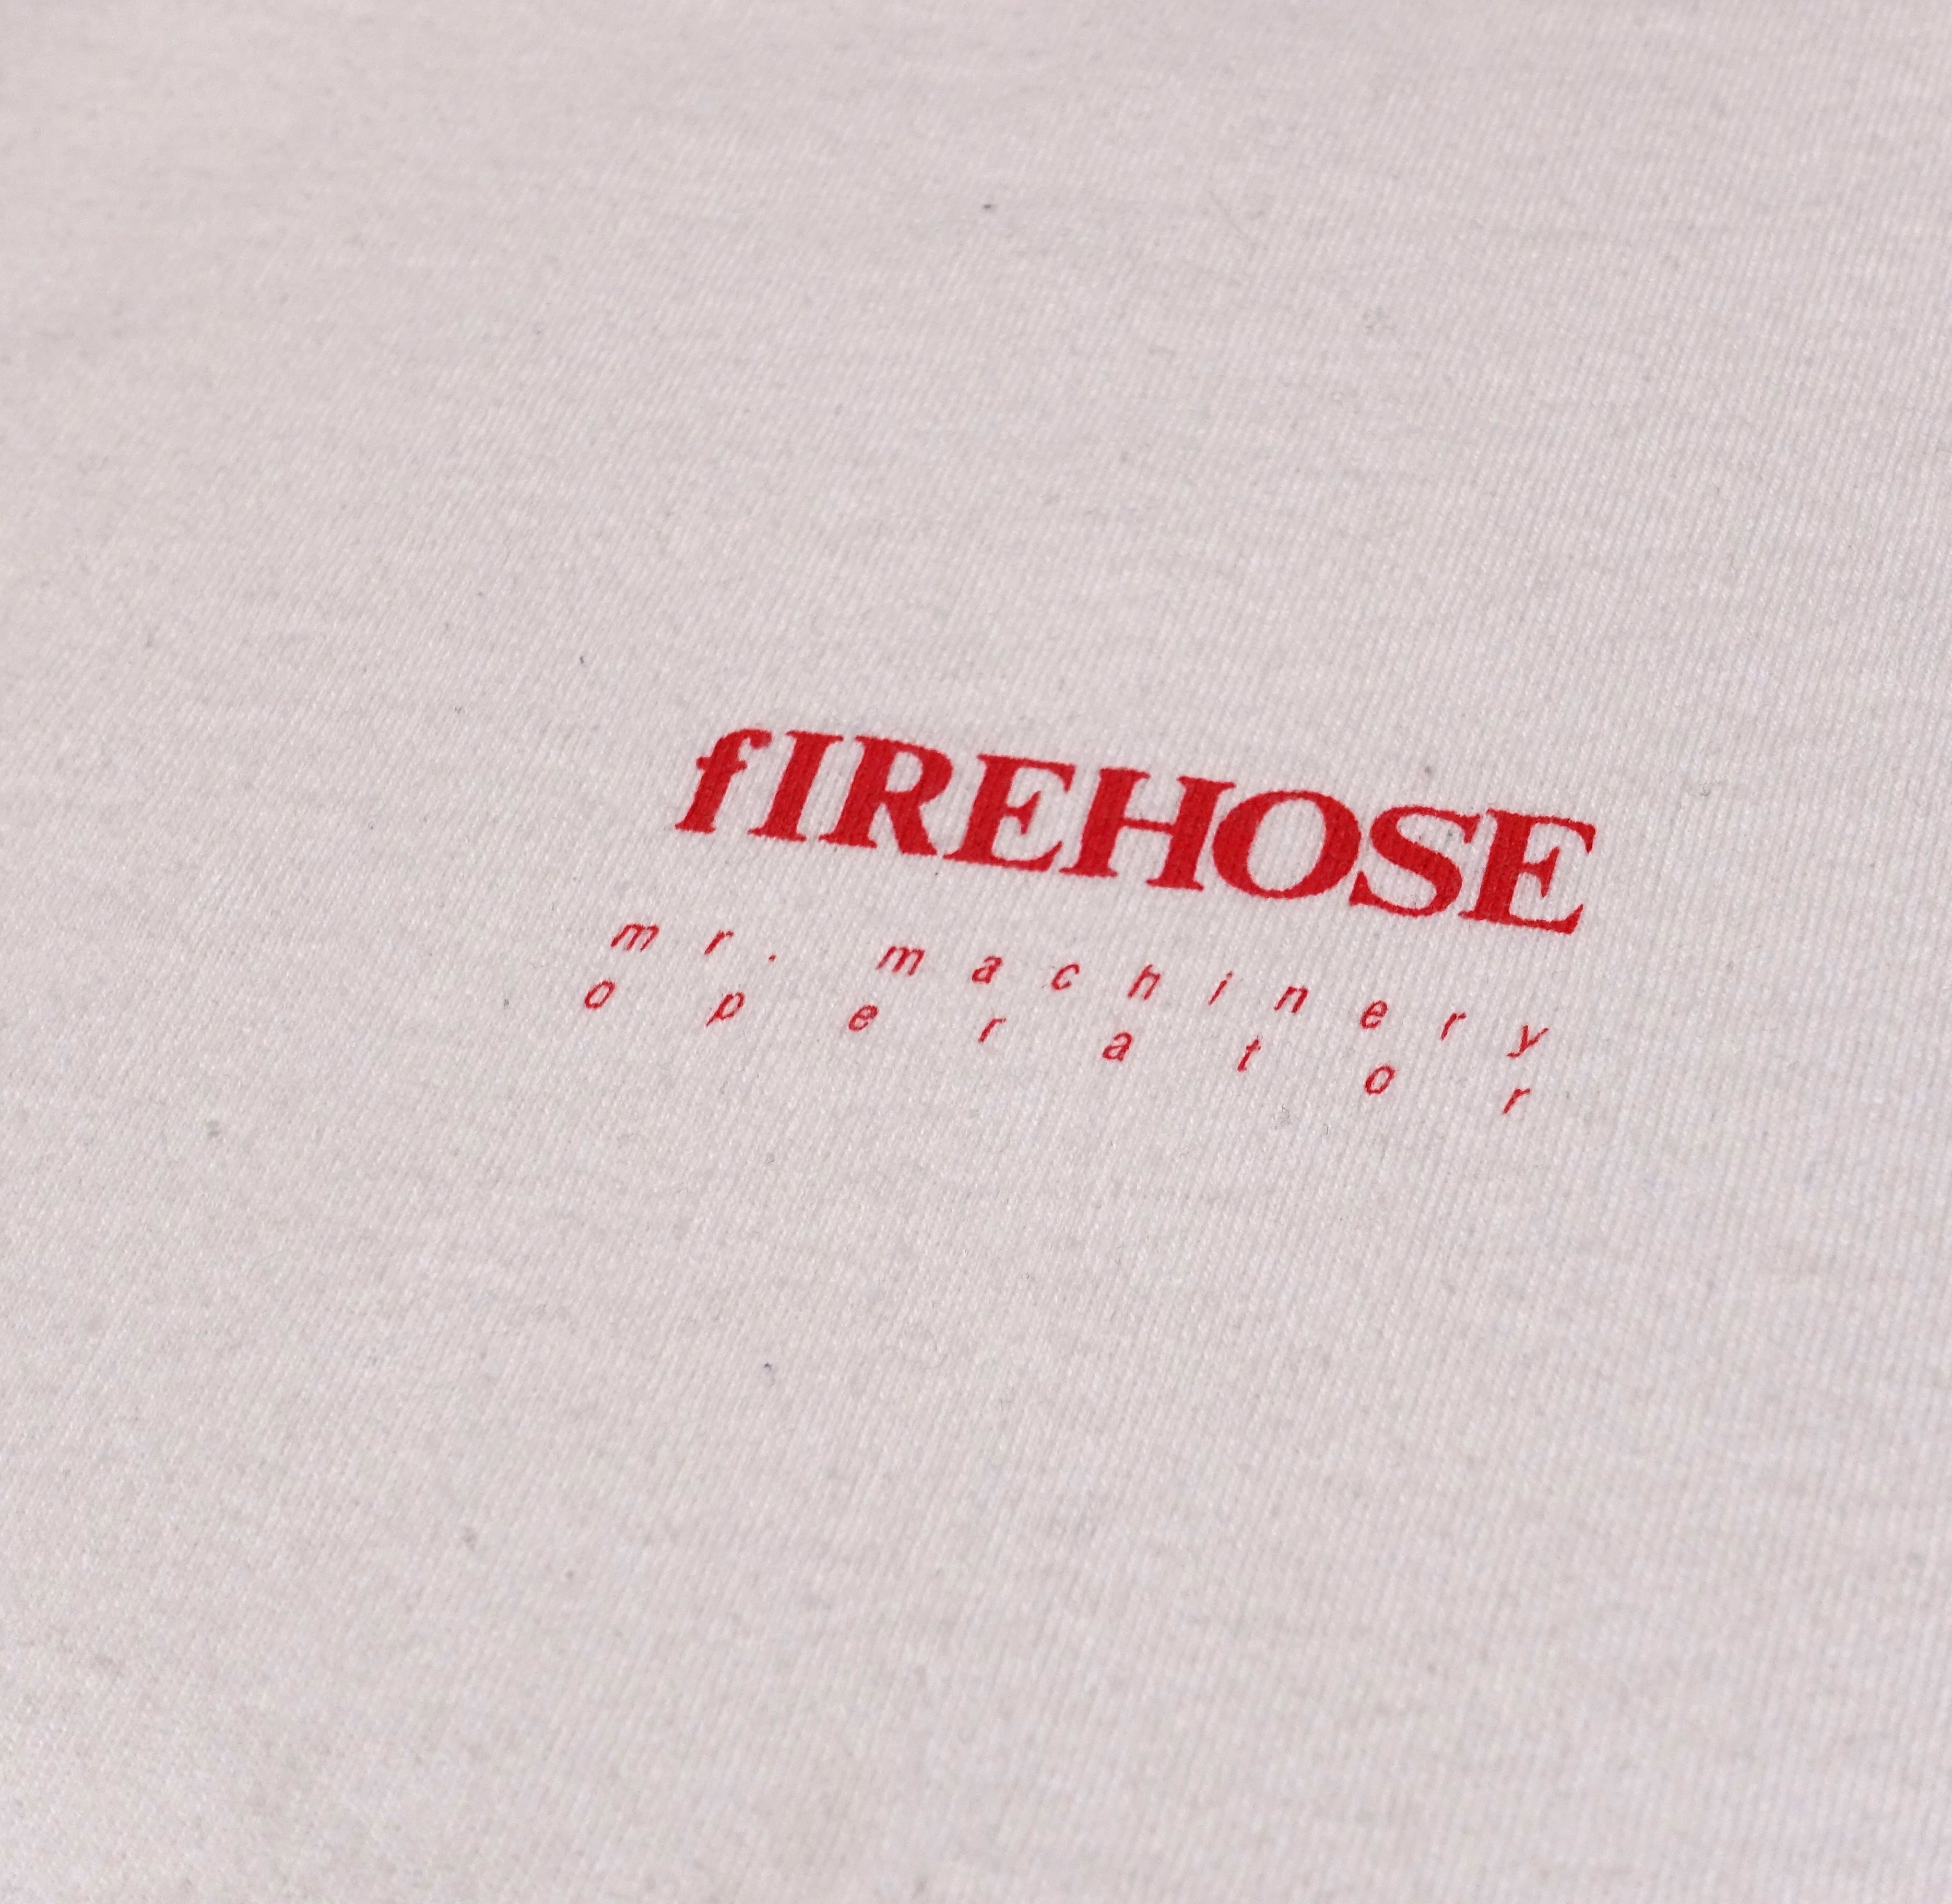 fIREHOSE - Mr. Machinery Operator / Blaze Columbia Records Promo Only Shirt Size XL